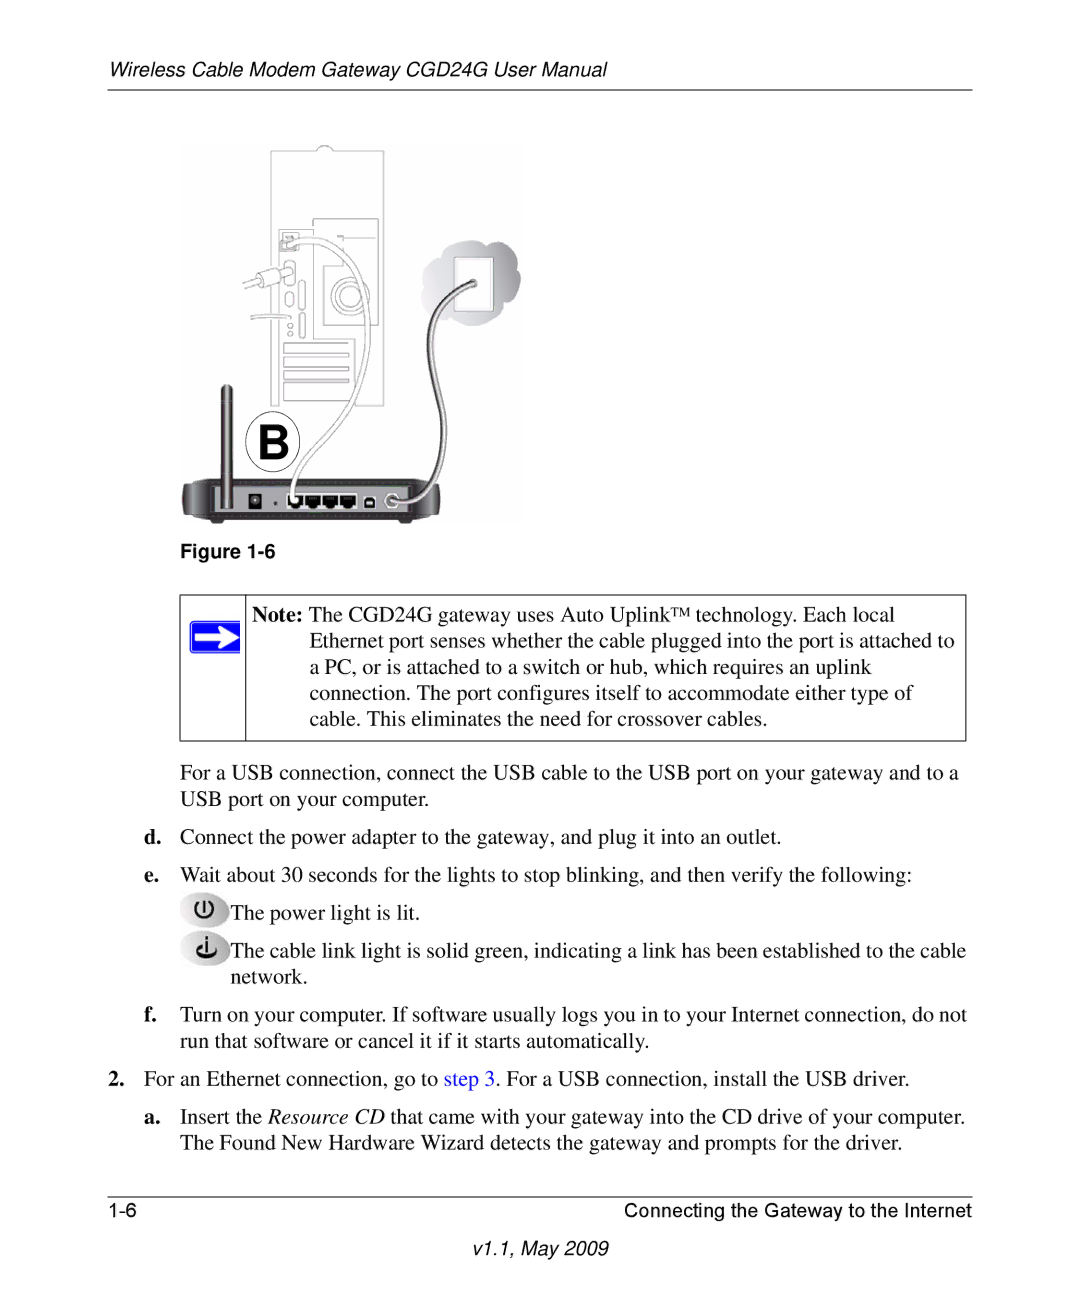 Gateway CGD24G user manual V1.1, May 